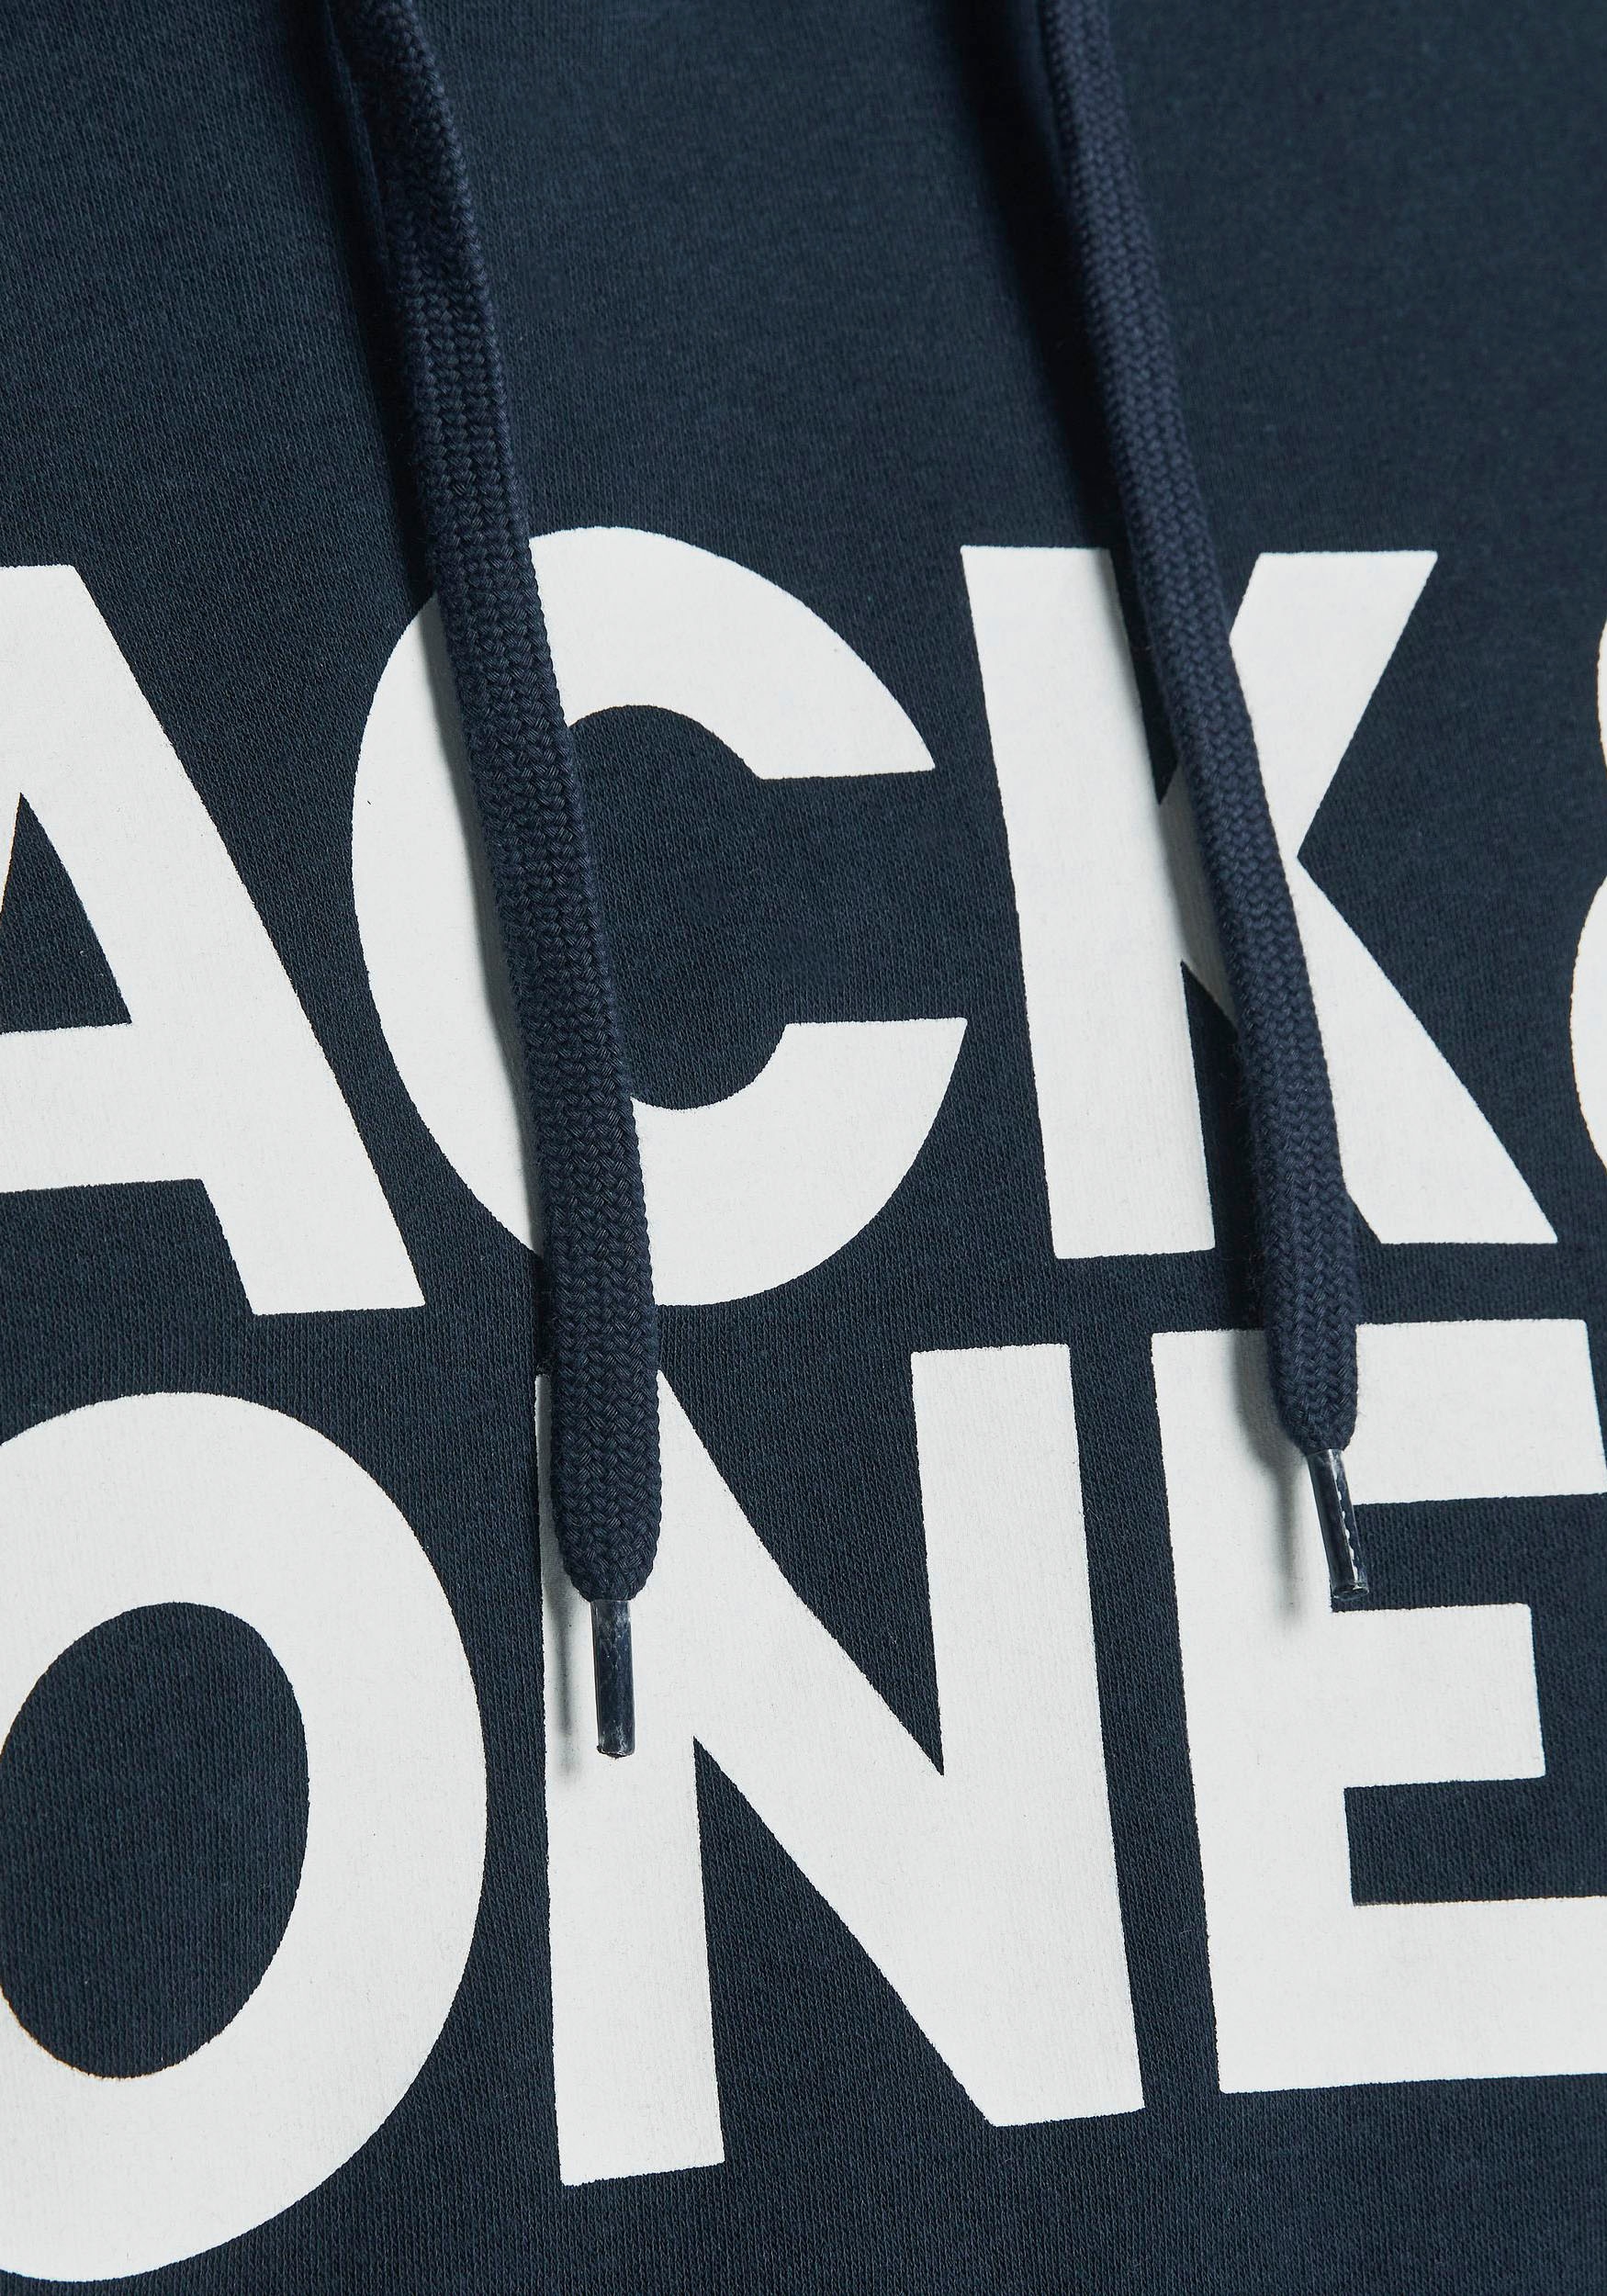 Jack & Jones PlusSize Kapuzensweatshirt »CORP LOGO SWEAT HOOD«, Bis Größe 6XL